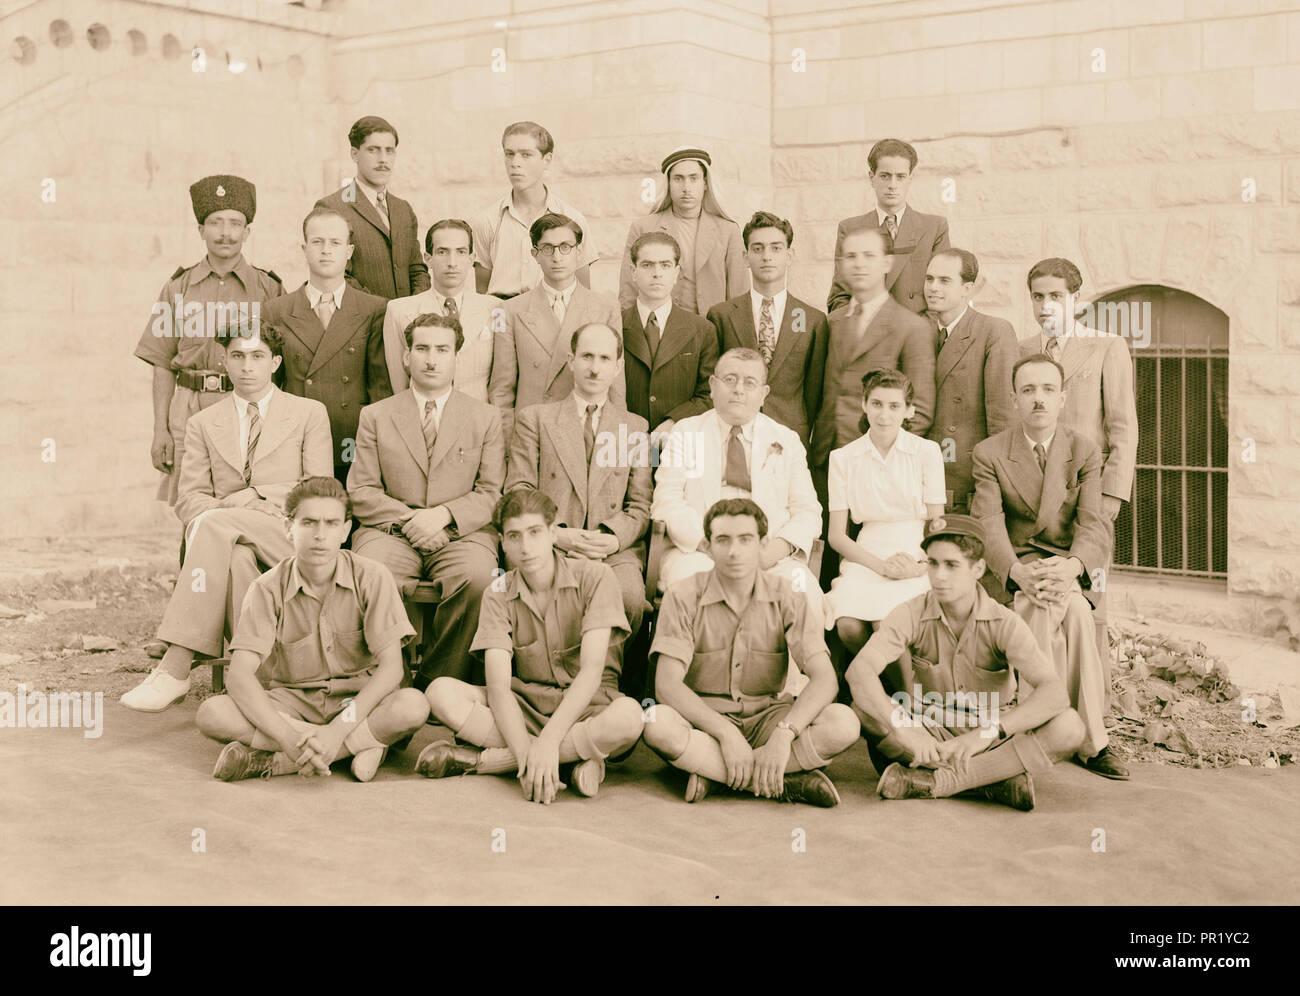 P.B.S groups taken on Aug. 8, 1942 (Arabs & Jews), smaller group 1942, Jerusalem, Israel Stock Photo